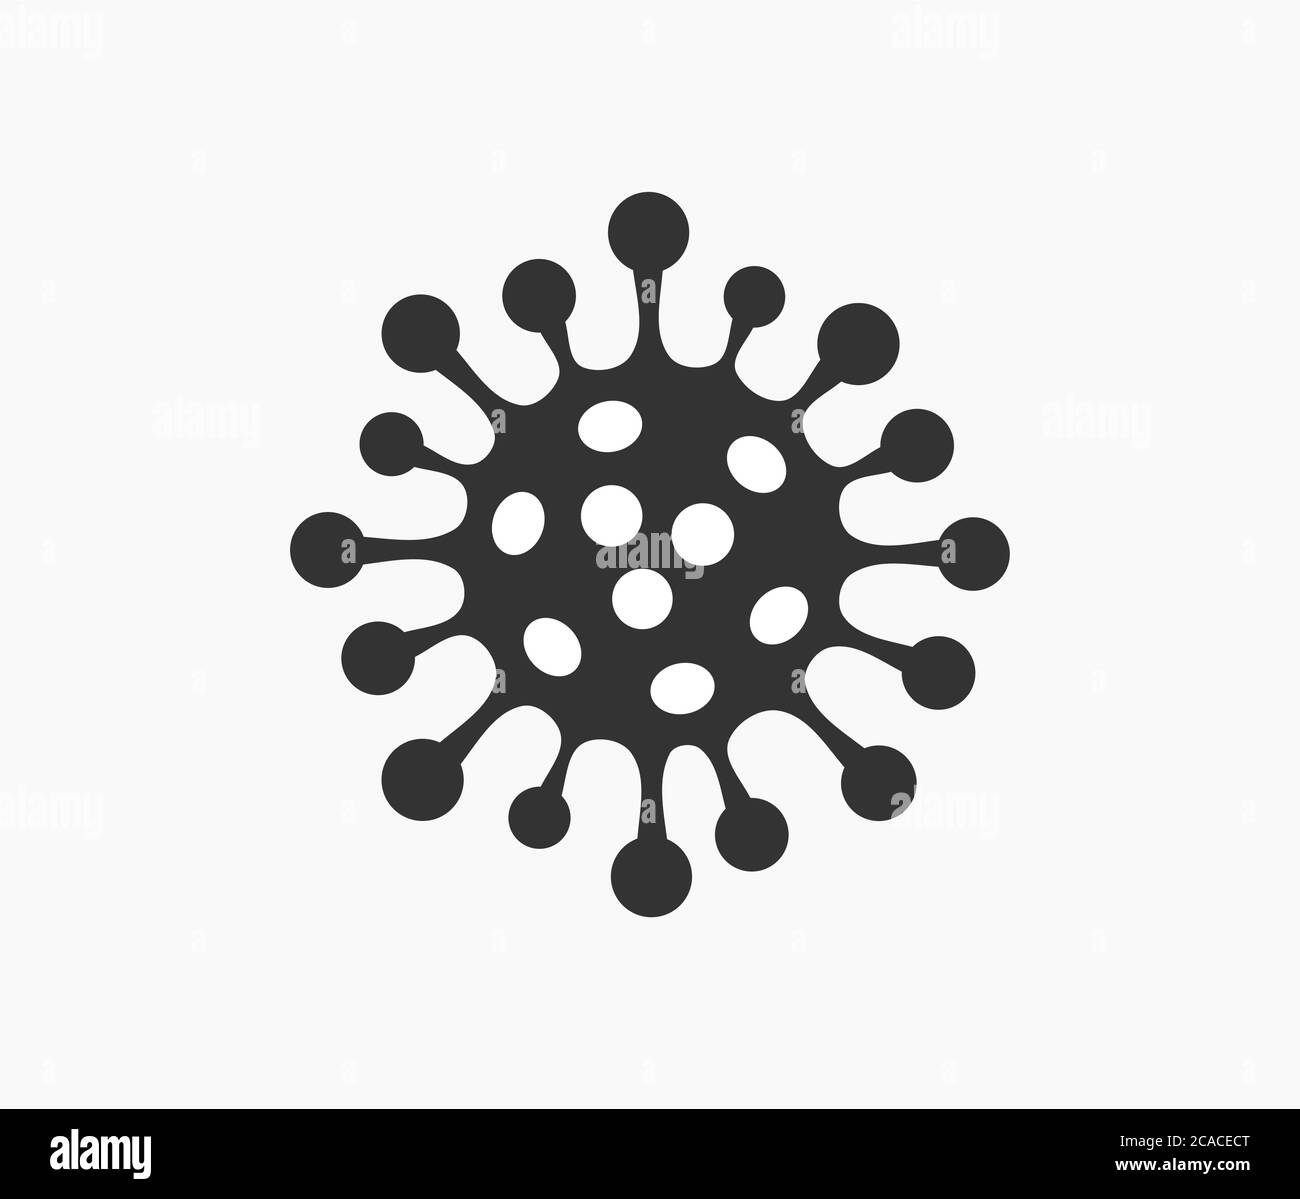 Coronavirus virus symbol. Vector illustration. Stock Vector